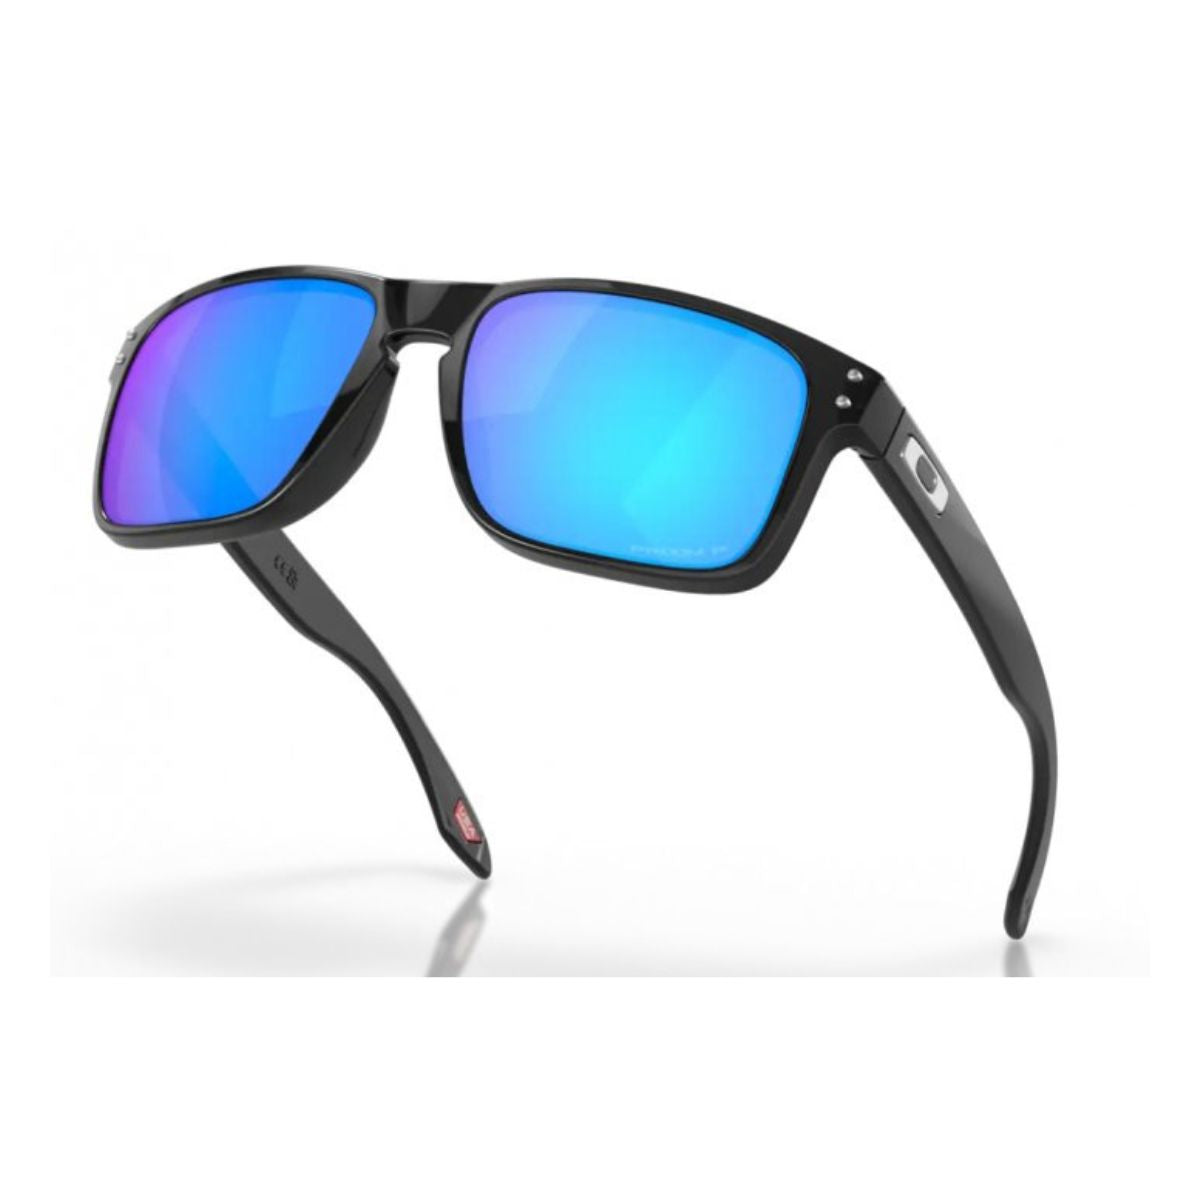 Buy Oakley Sunglasses 9102 For Men Online At Best Price